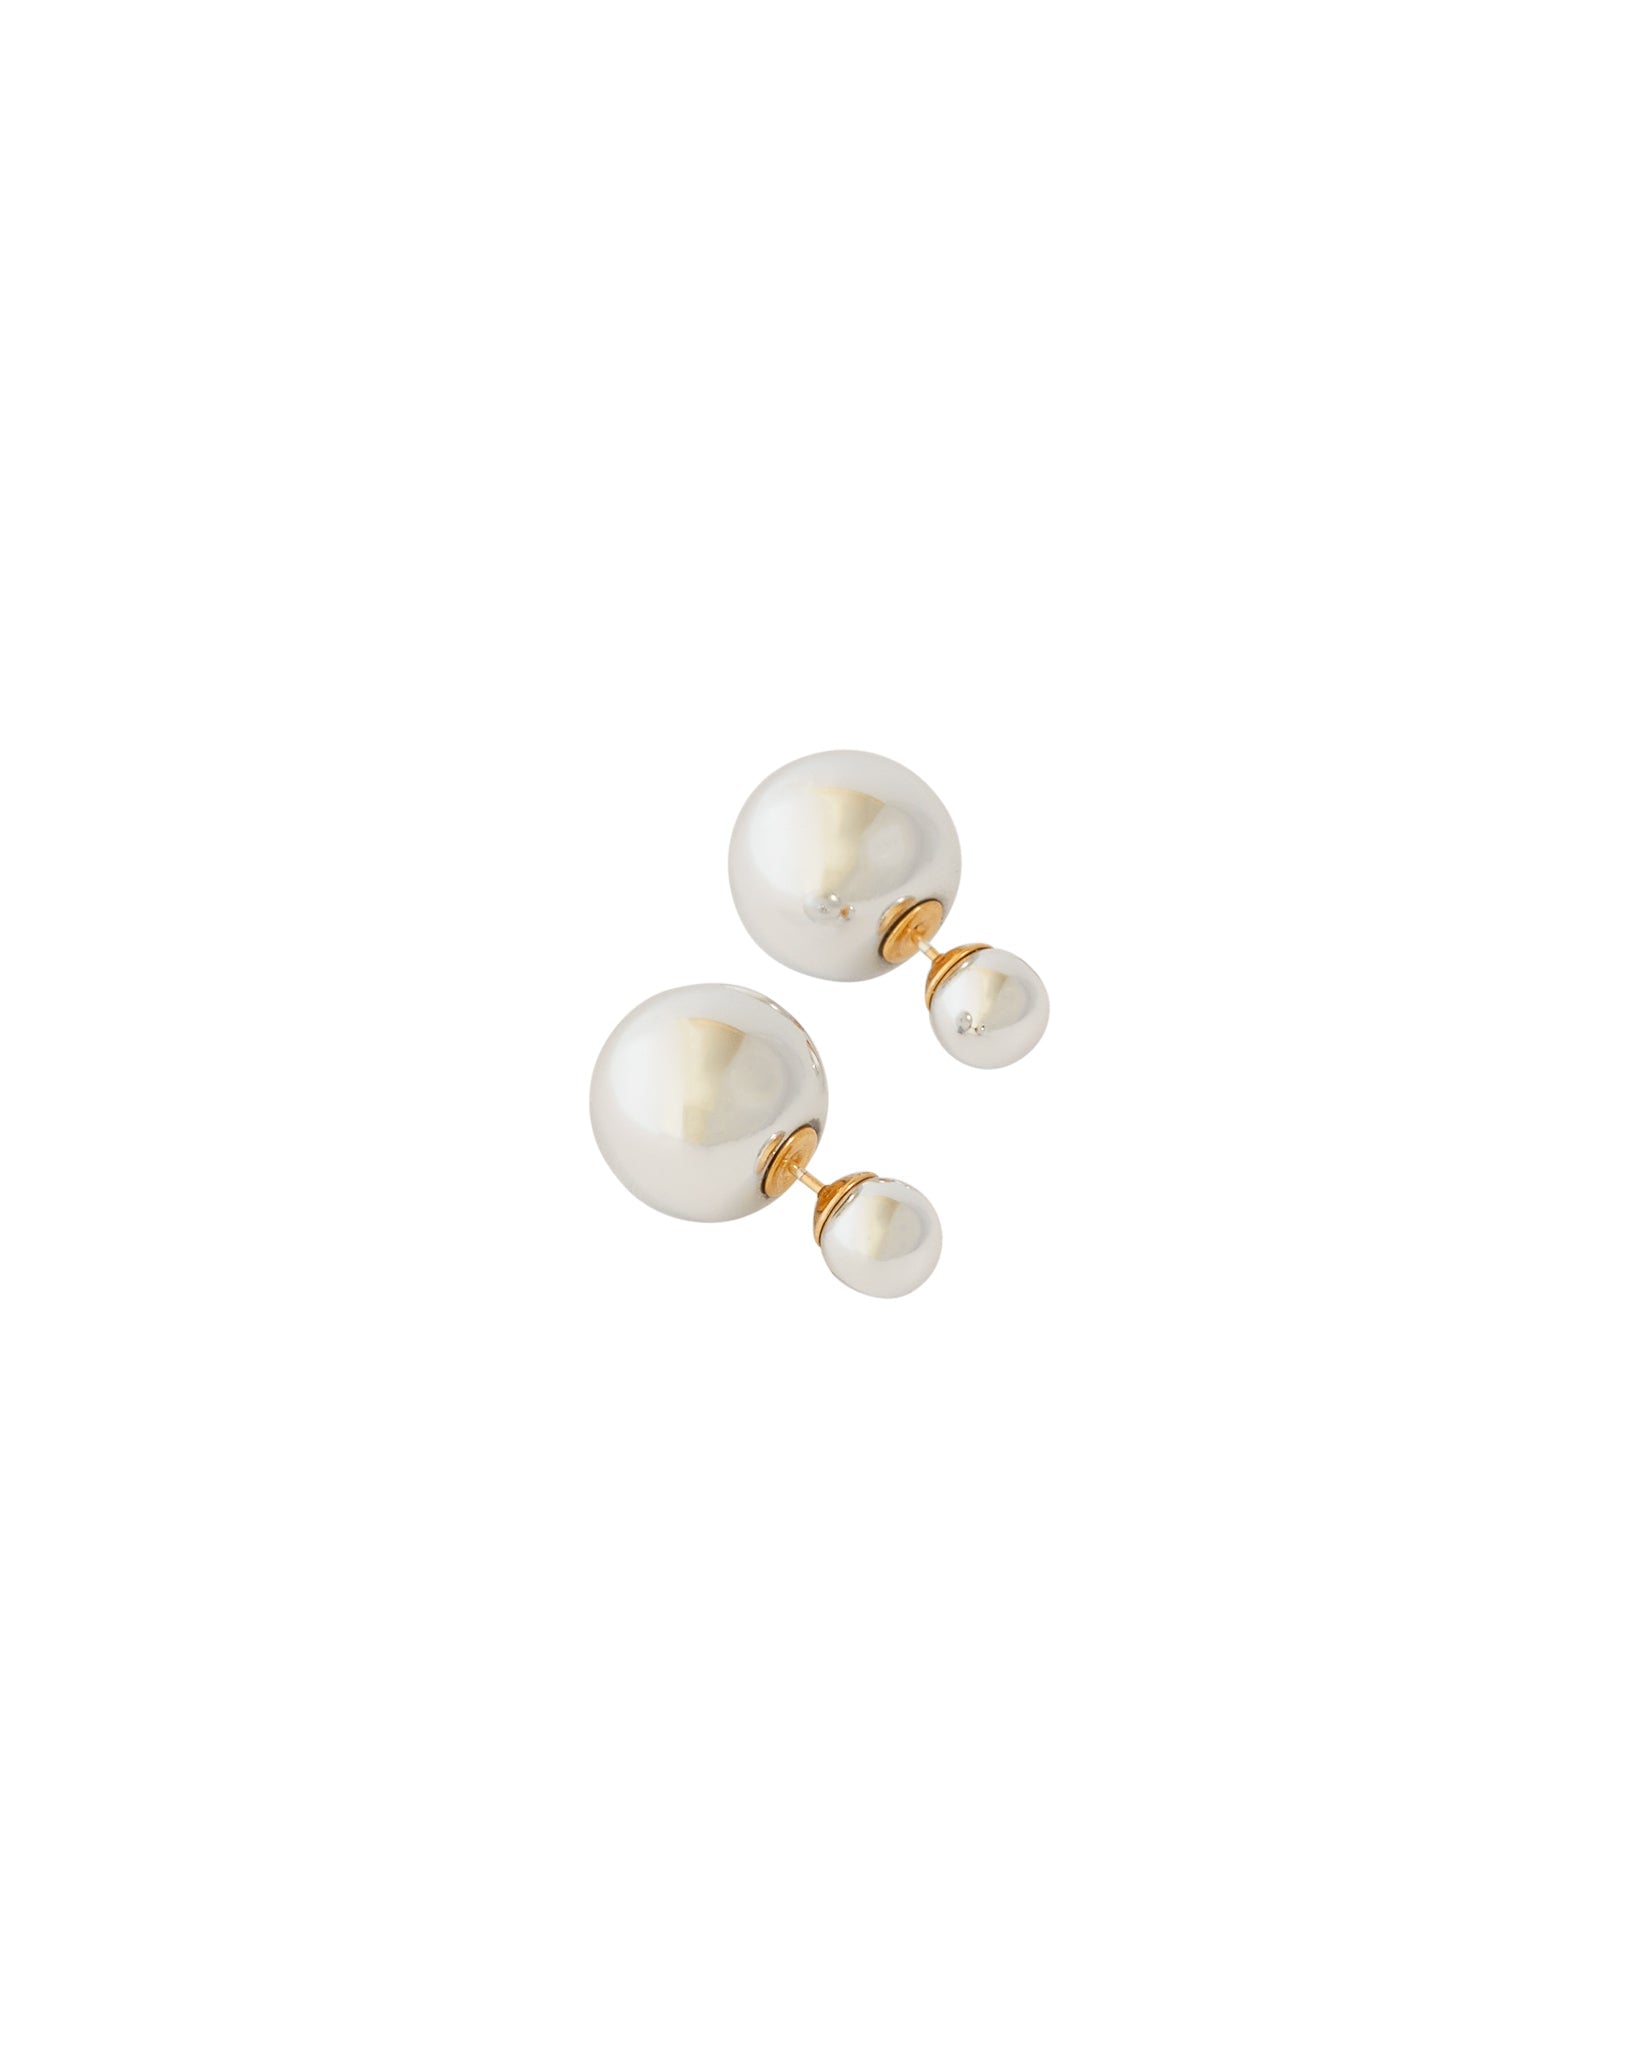 Double Ball Earrings - Pearl/Pearl